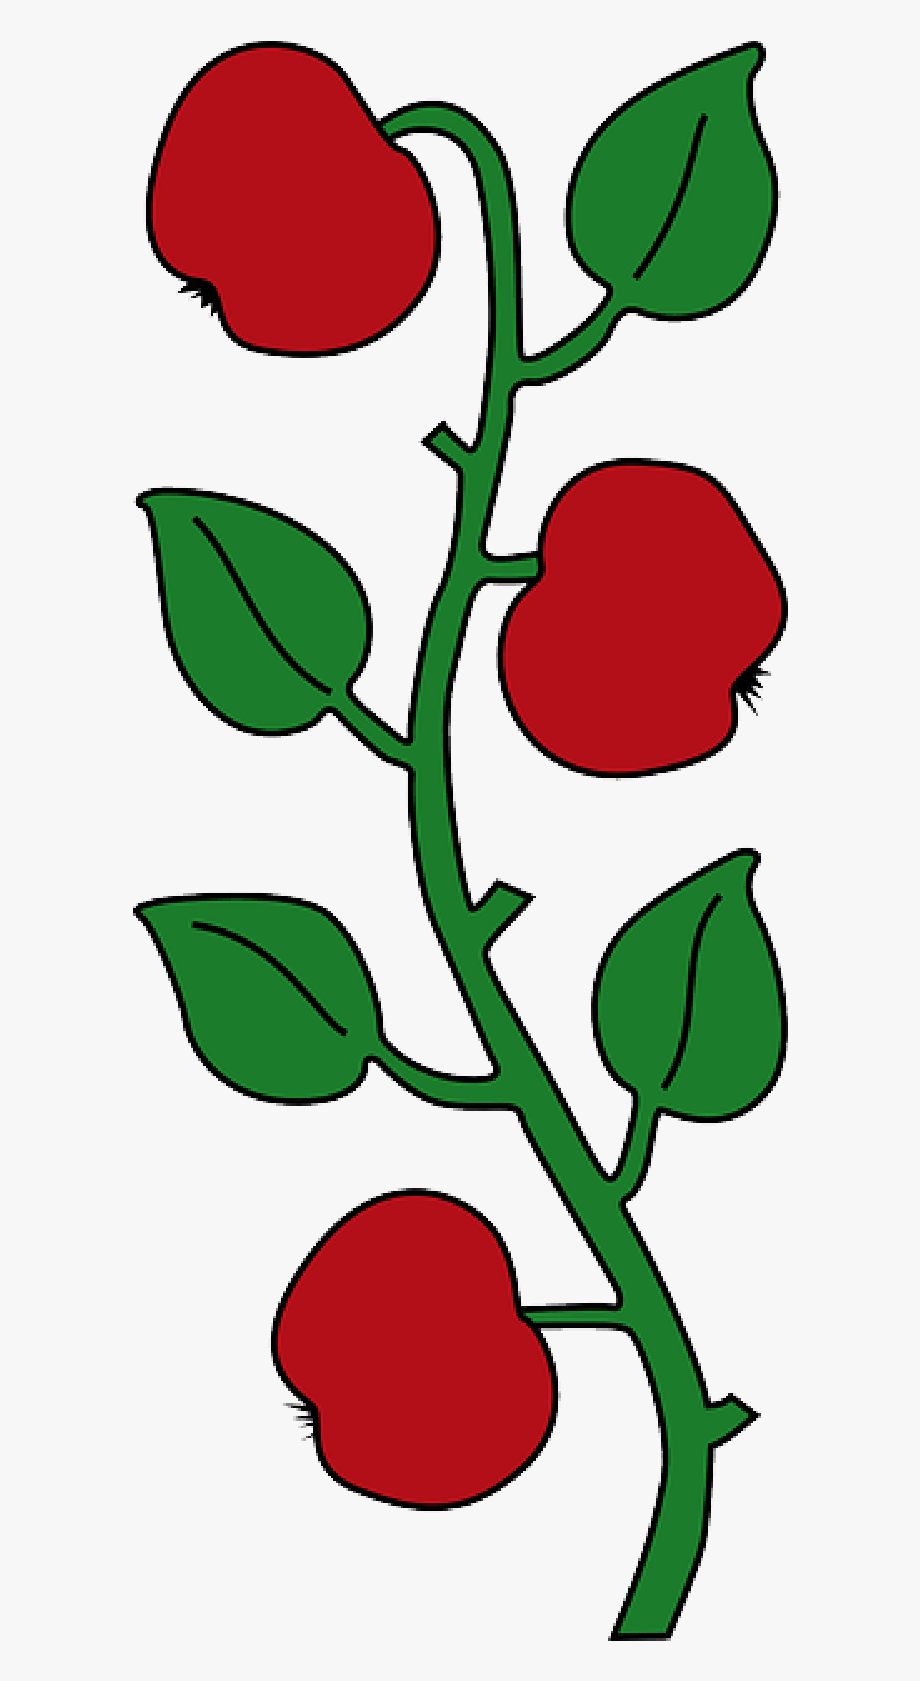 Fruit tree cartoon.